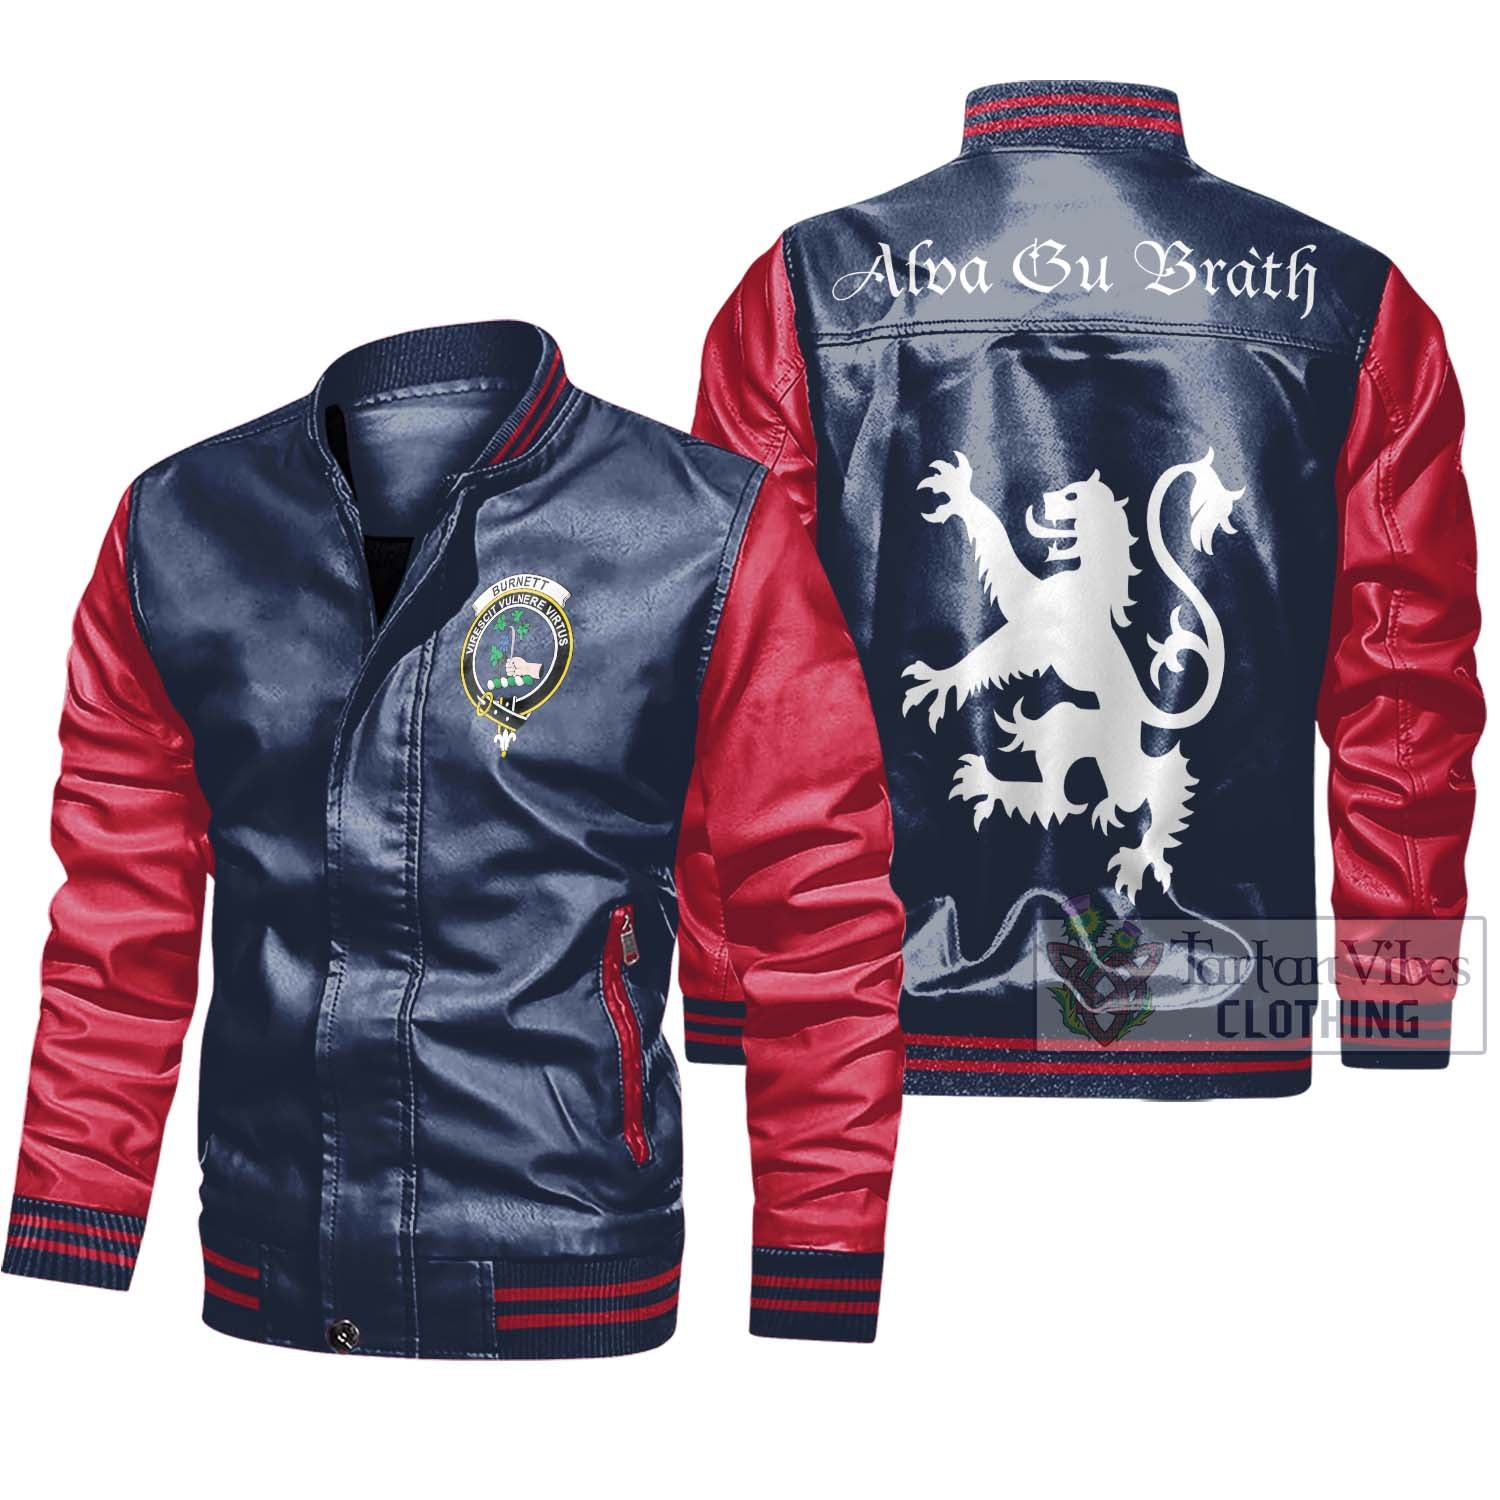 Tartan Vibes Clothing Burnett Family Crest Leather Bomber Jacket Lion Rampant Alba Gu Brath Style